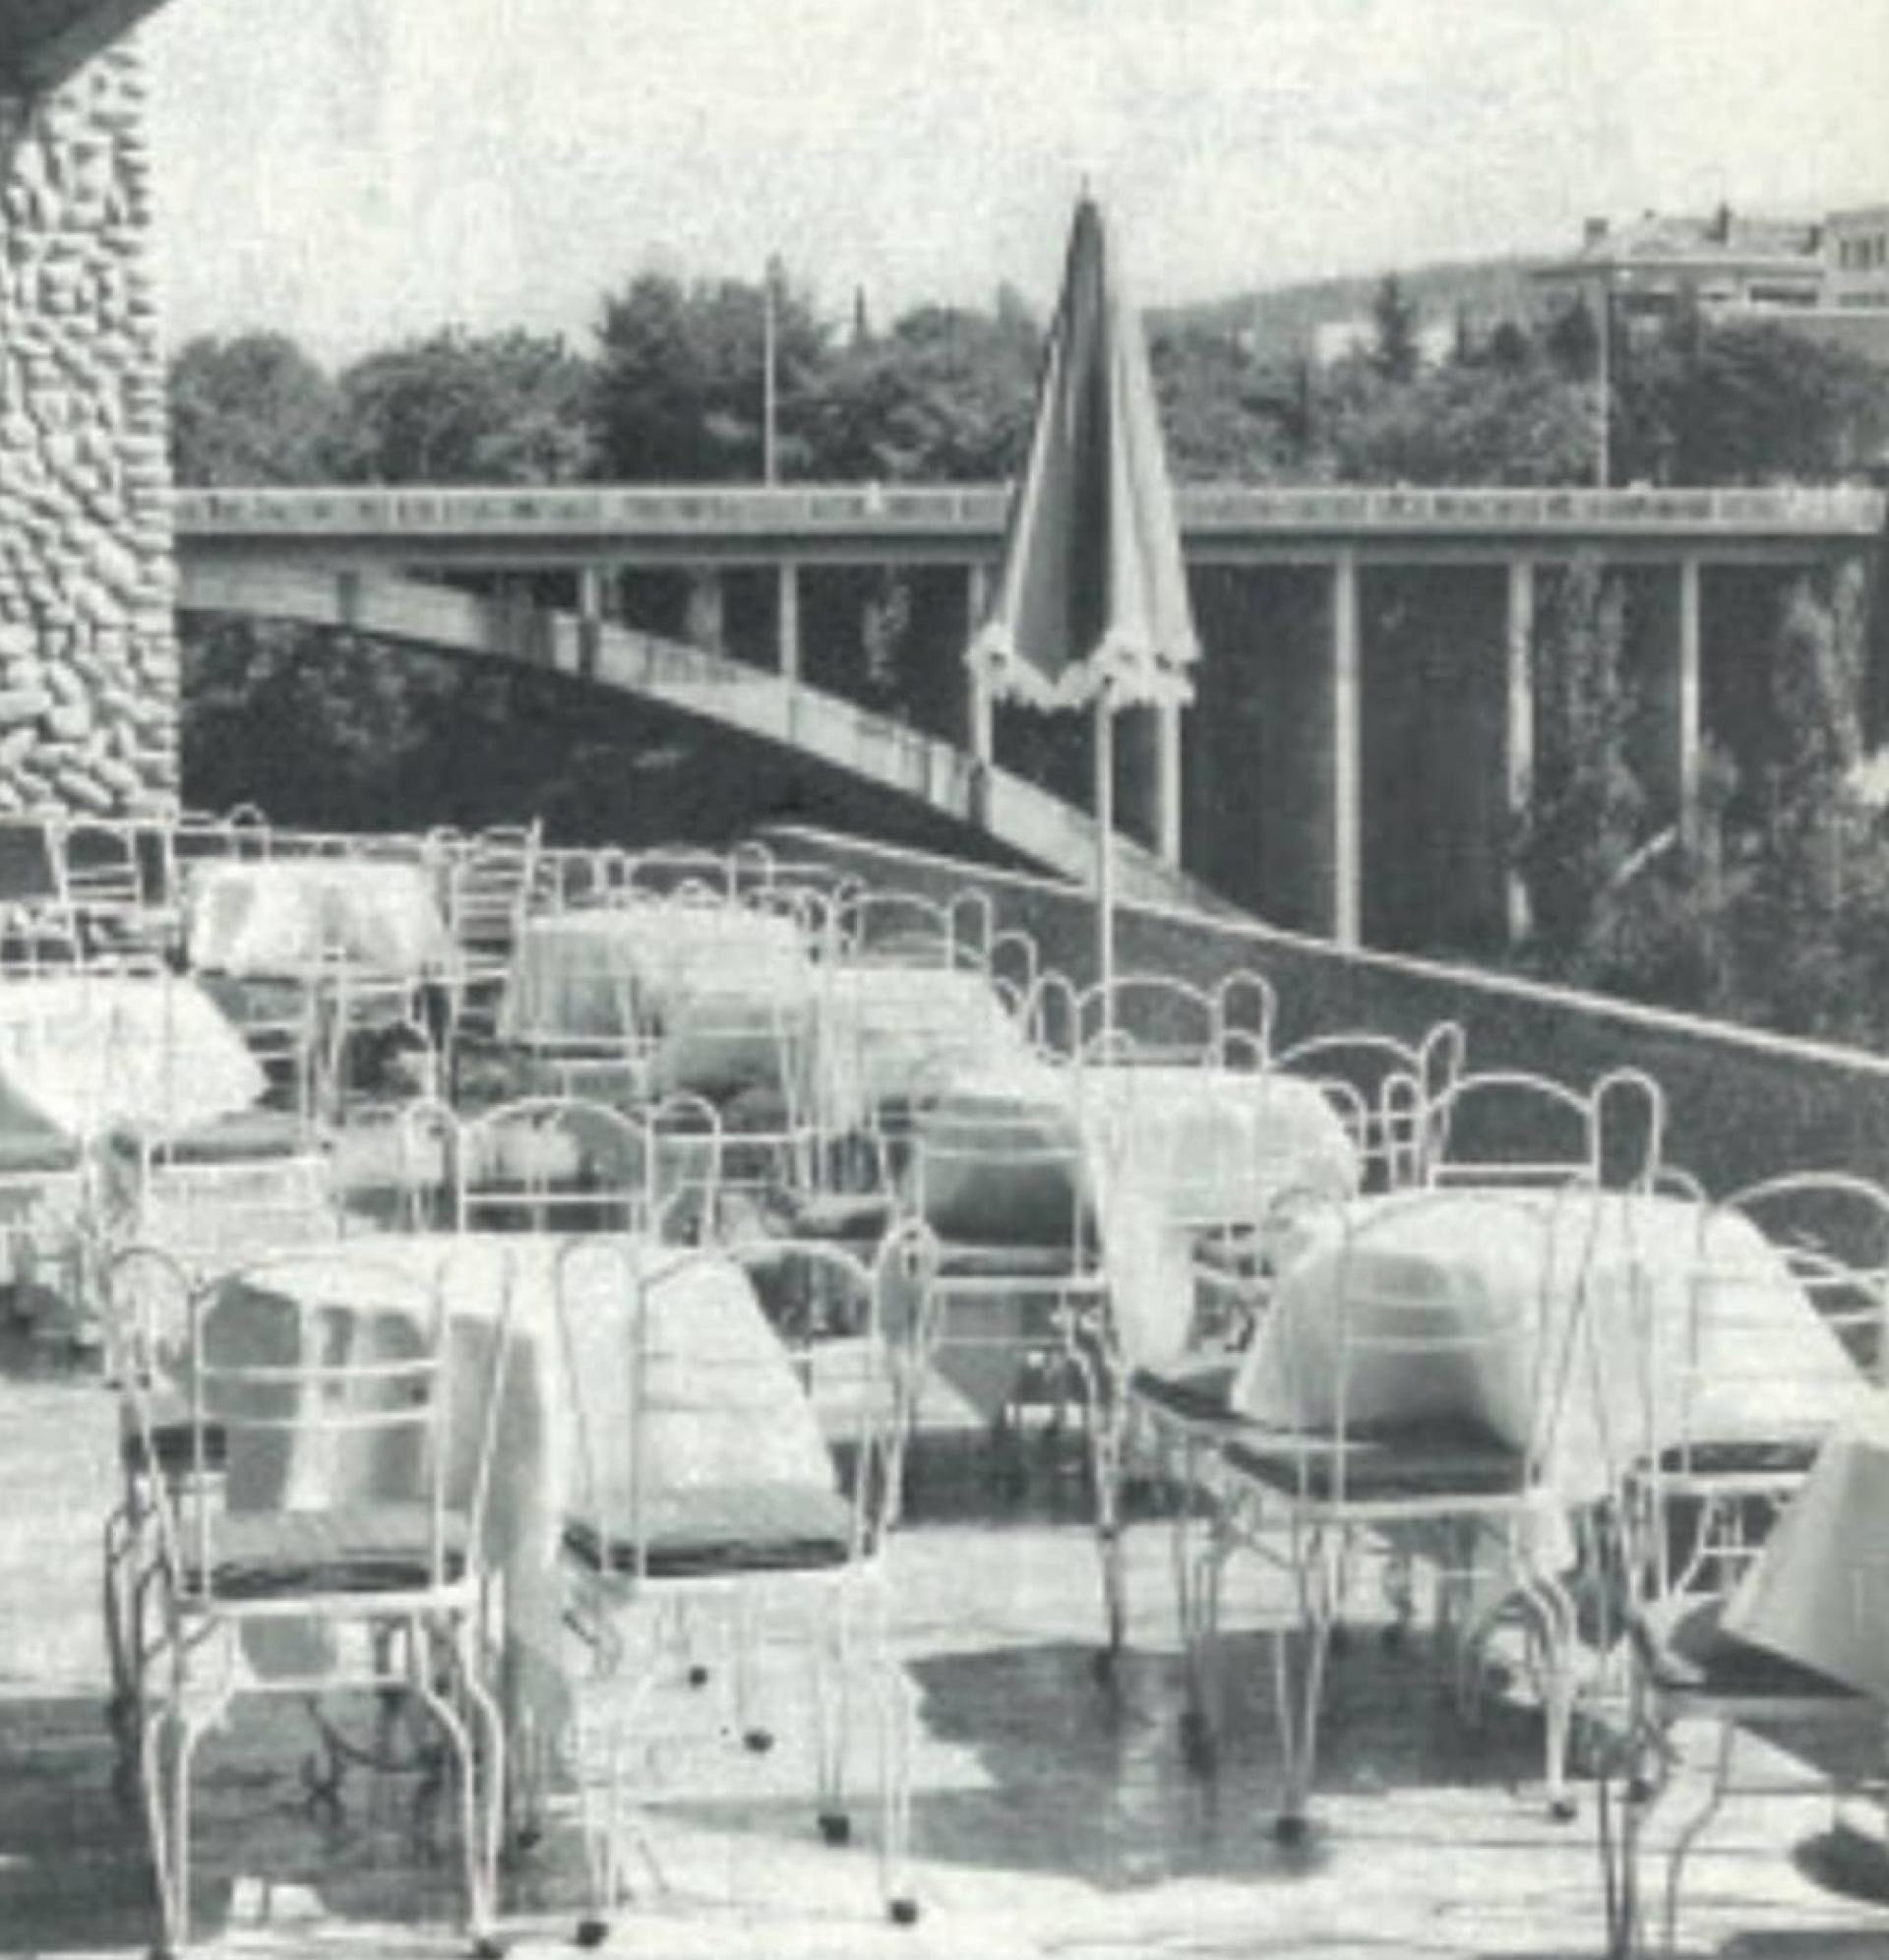 The terrace in 1979 | Photo © Podgorički cikotići